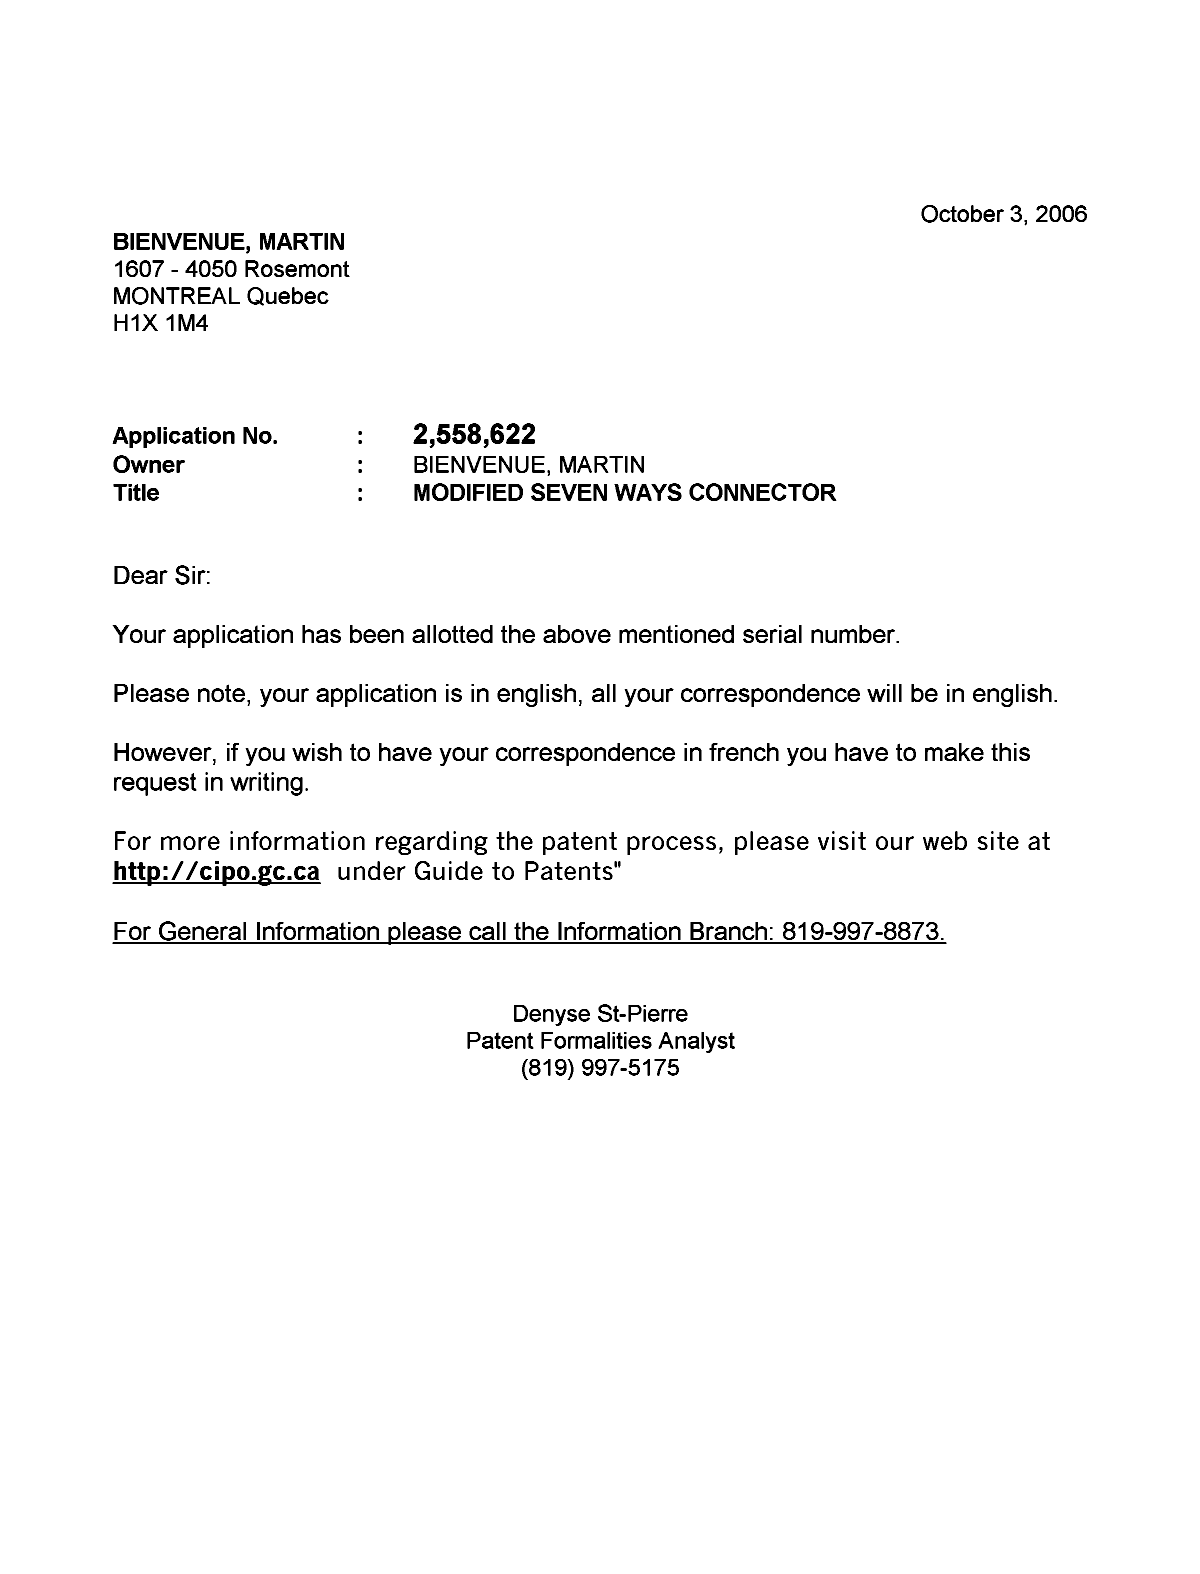 Canadian Patent Document 2558622. Correspondence 20051203. Image 1 of 1